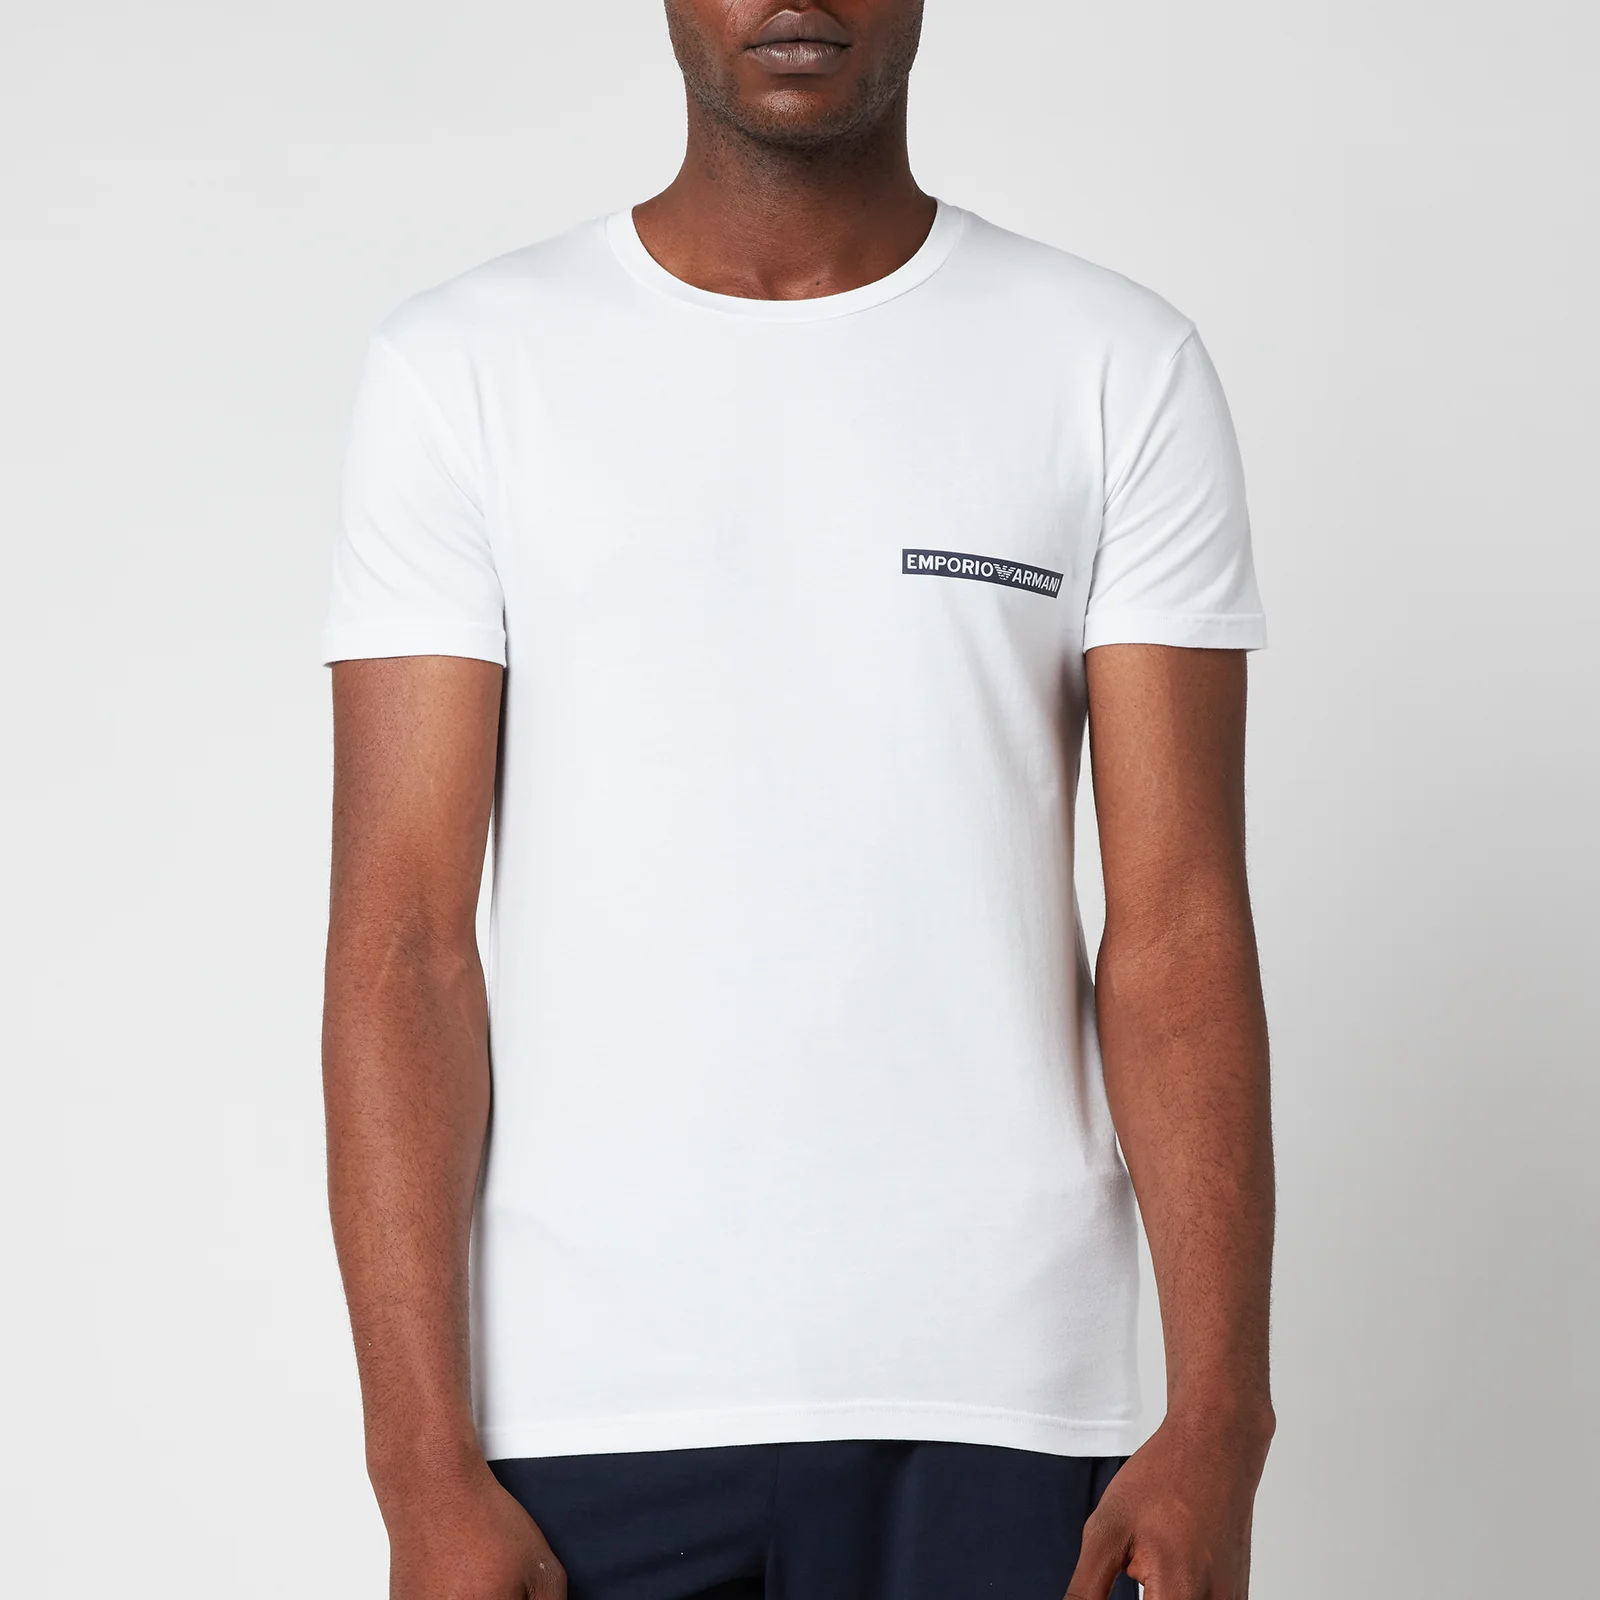 Emporio Armani Men's The New Icon Crew Neck T-Shirt - White Image 1